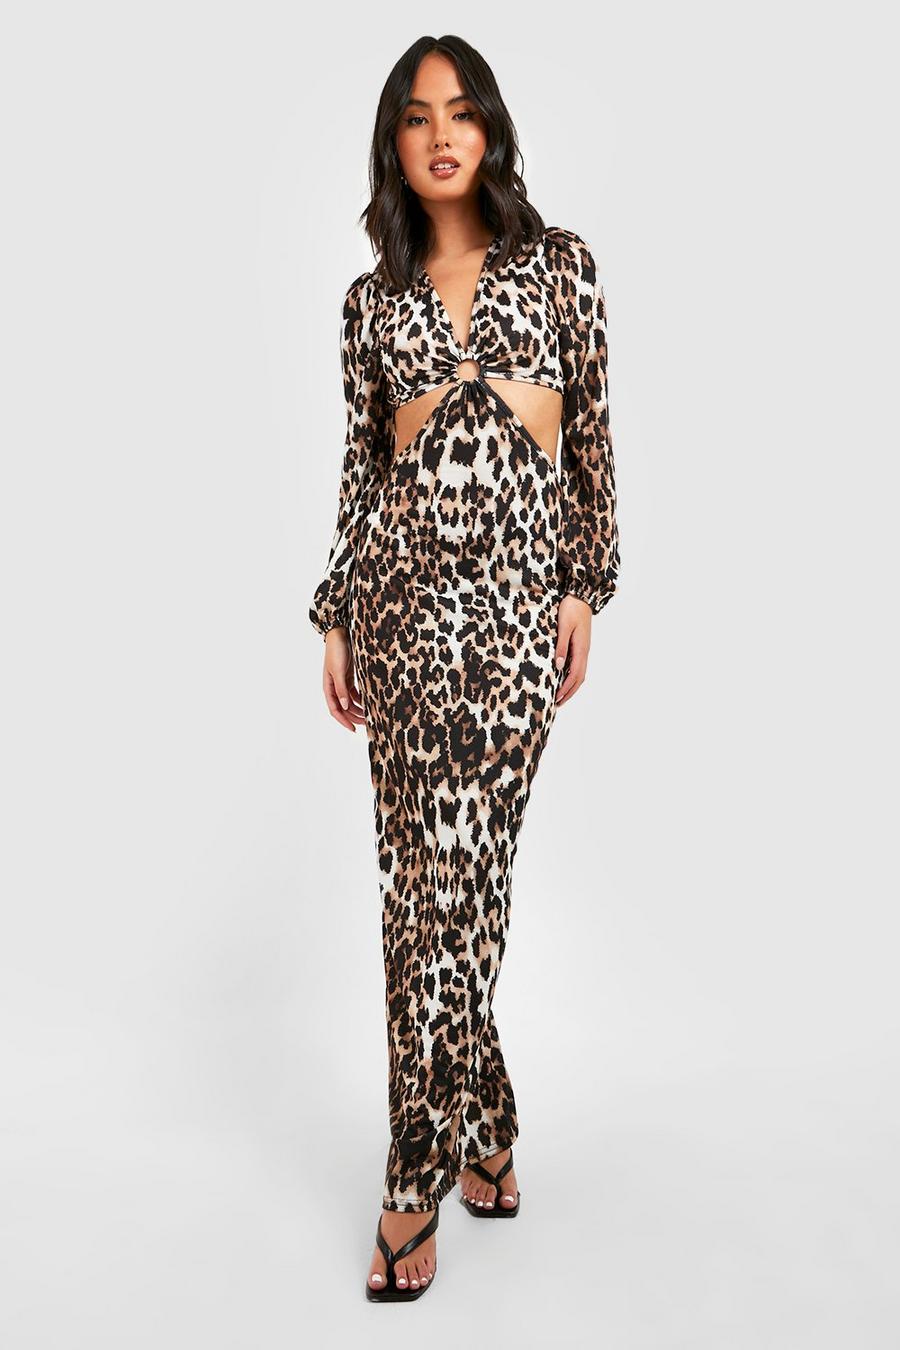 Brown Textured Leopard Cut Out Maxi Dress